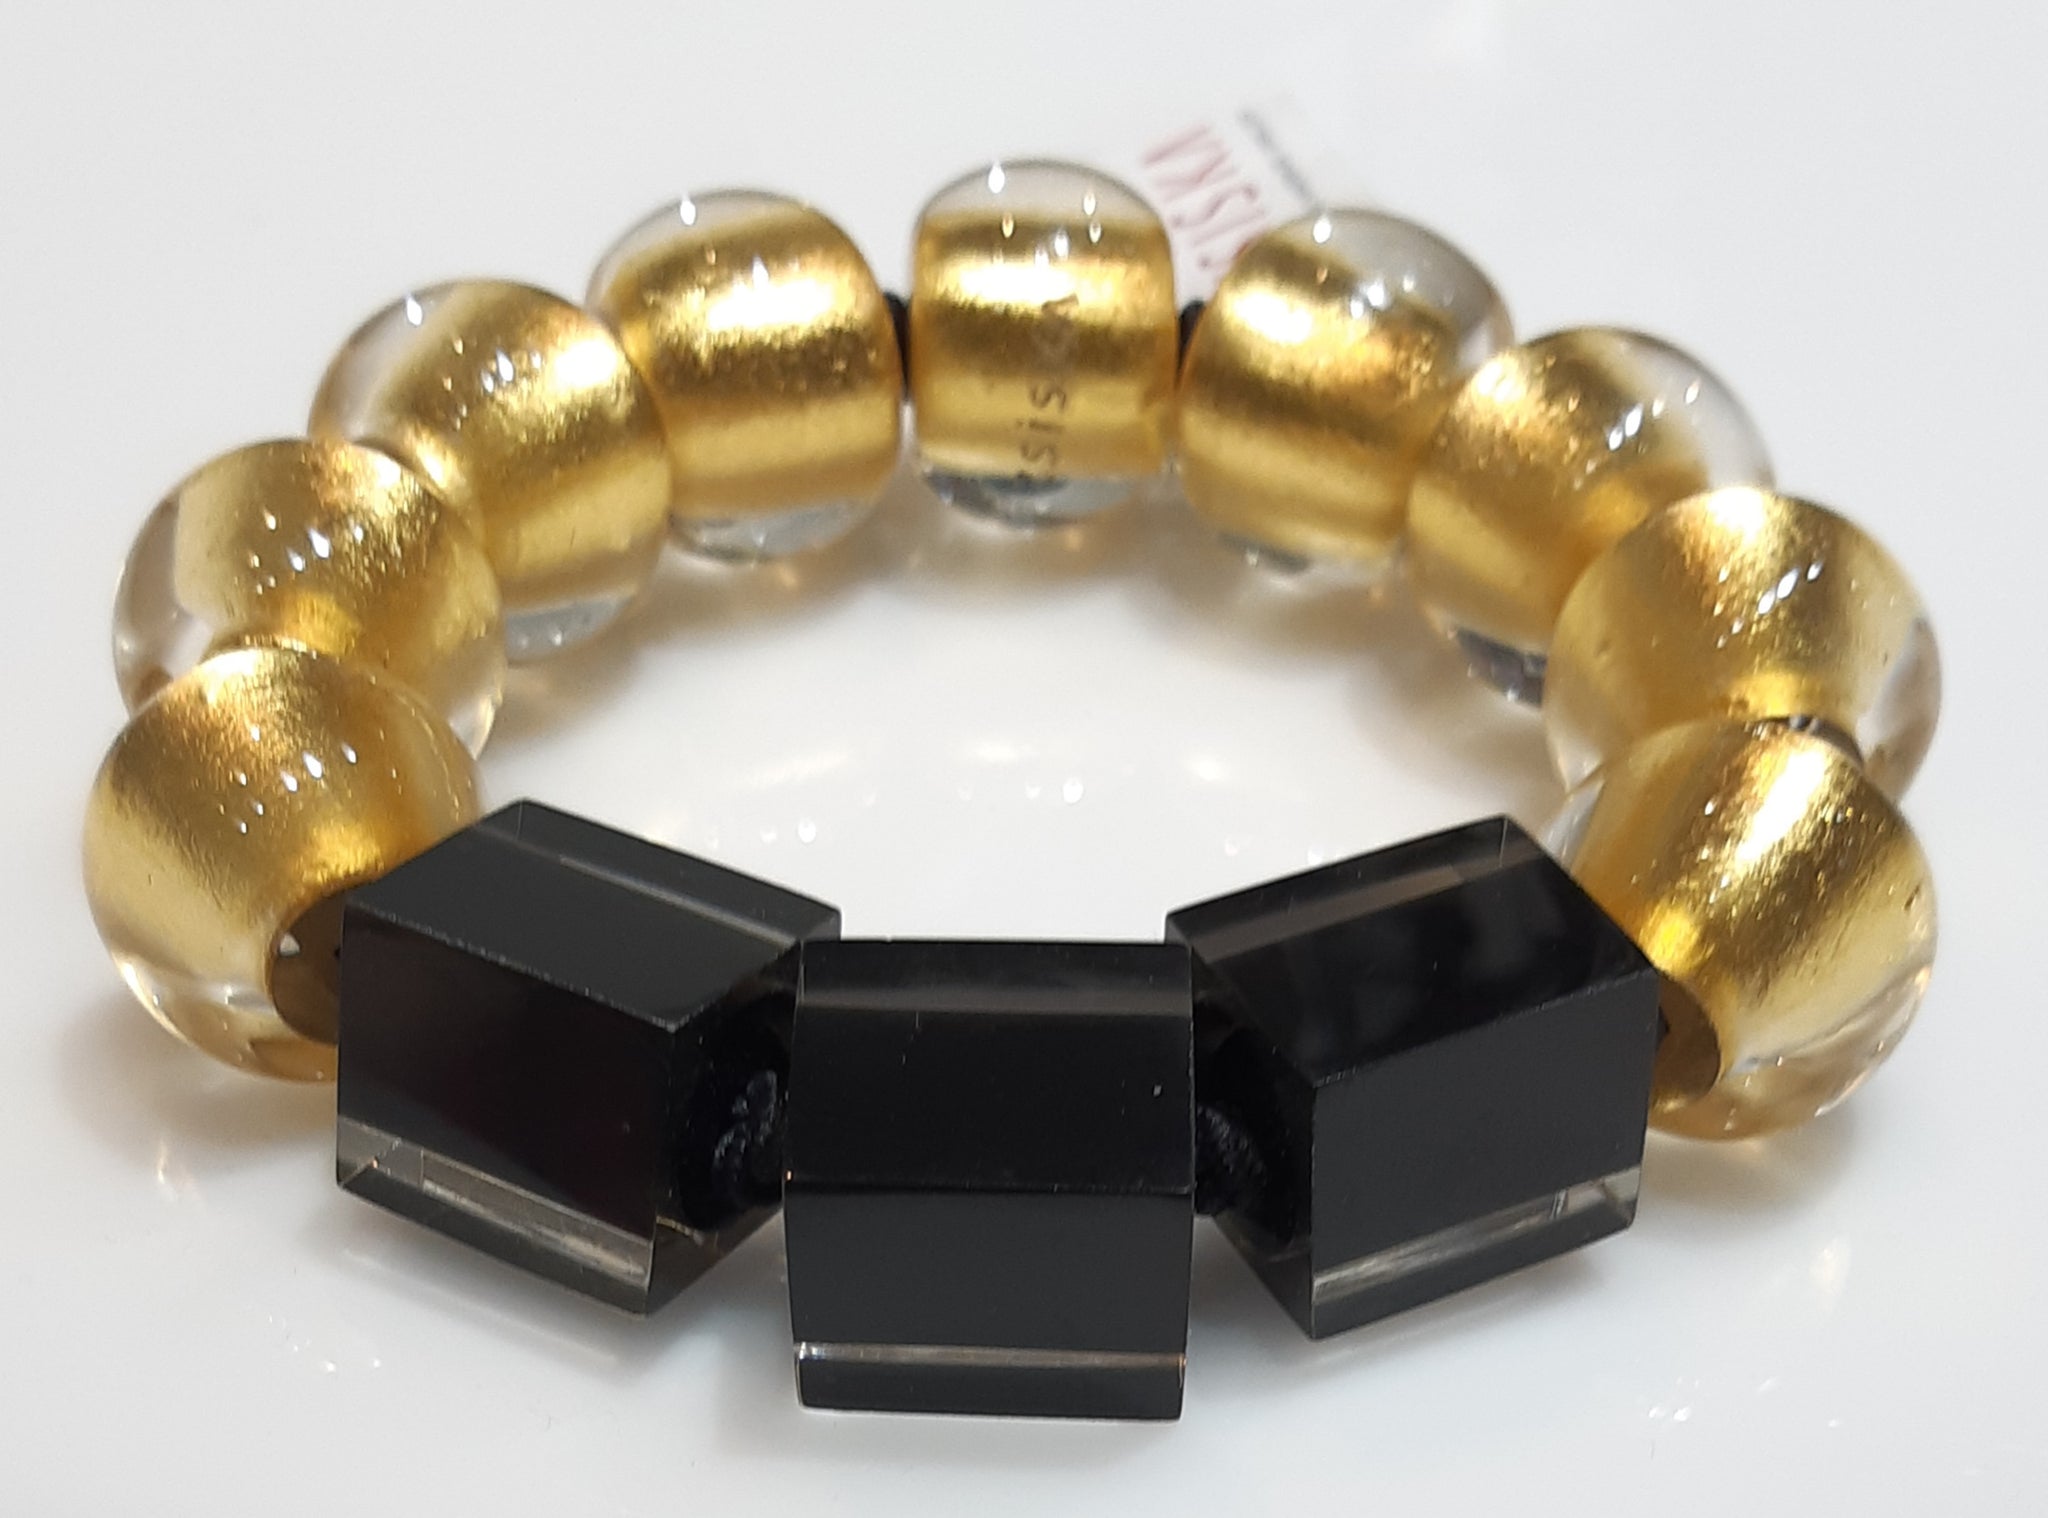 Zsiska Collection, "Precious" Bracelet #1000342G000Q0L